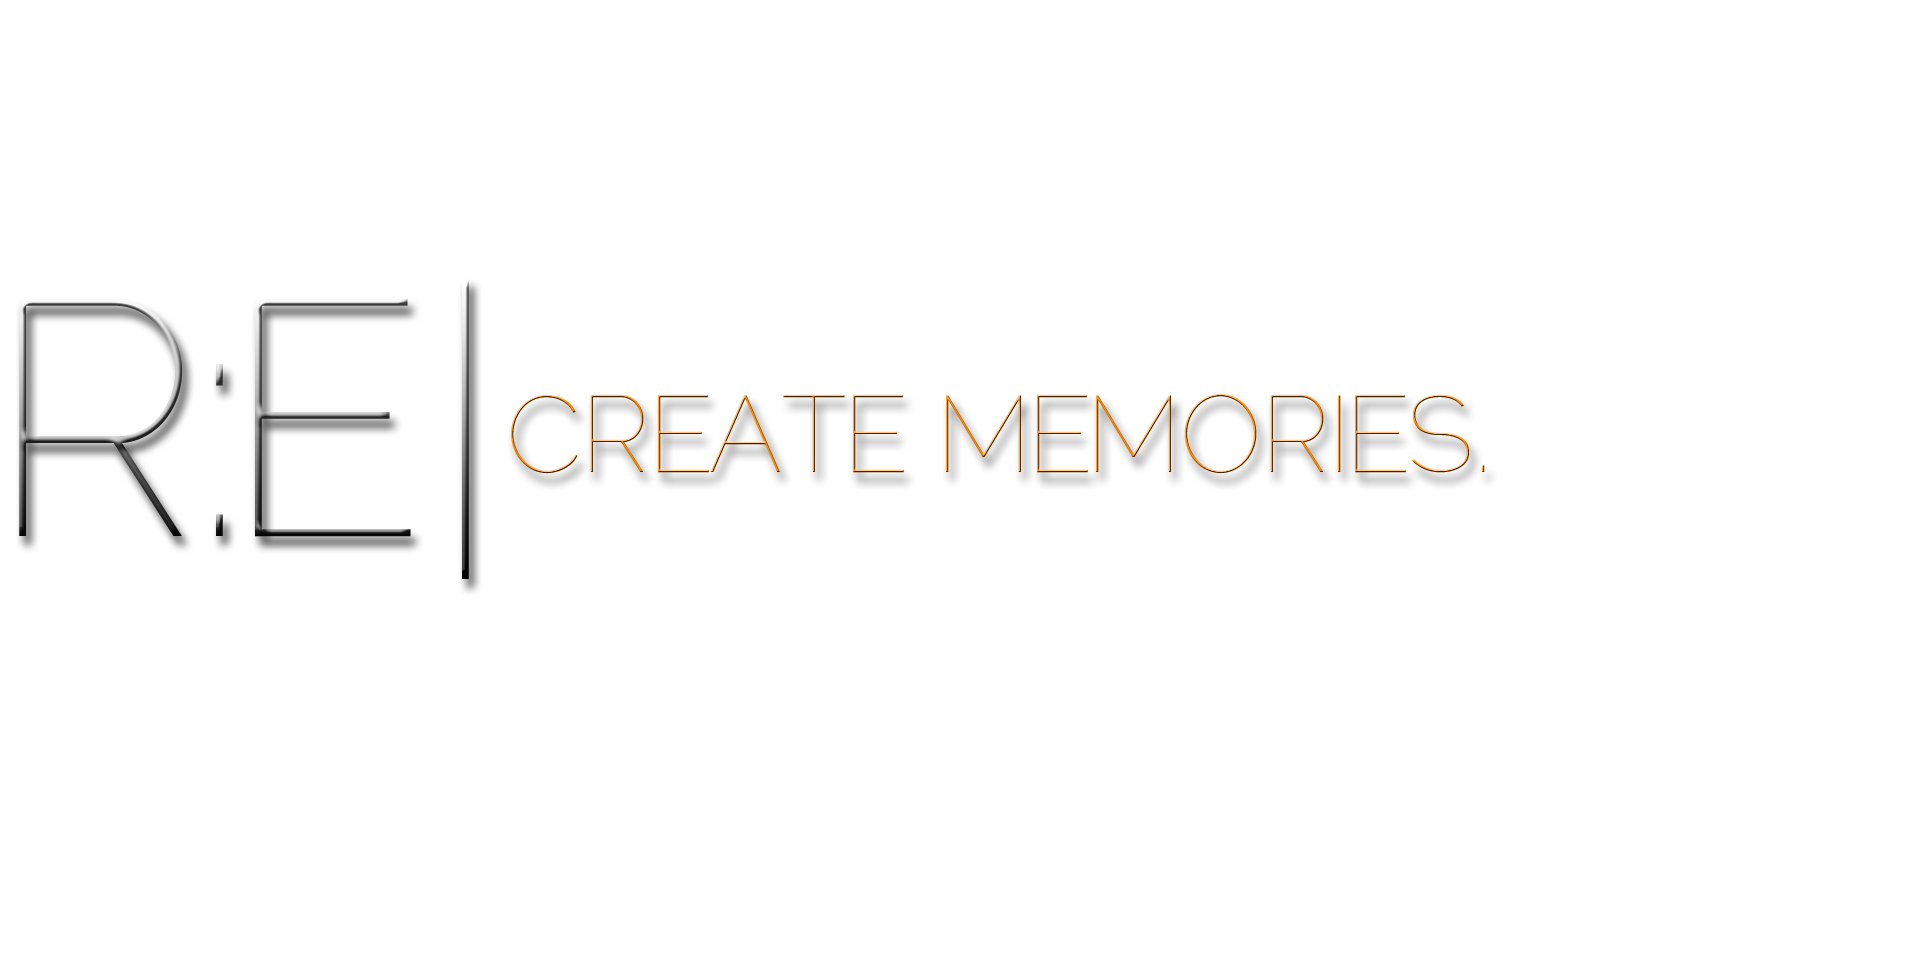 RE | CREATE MEMORIES.